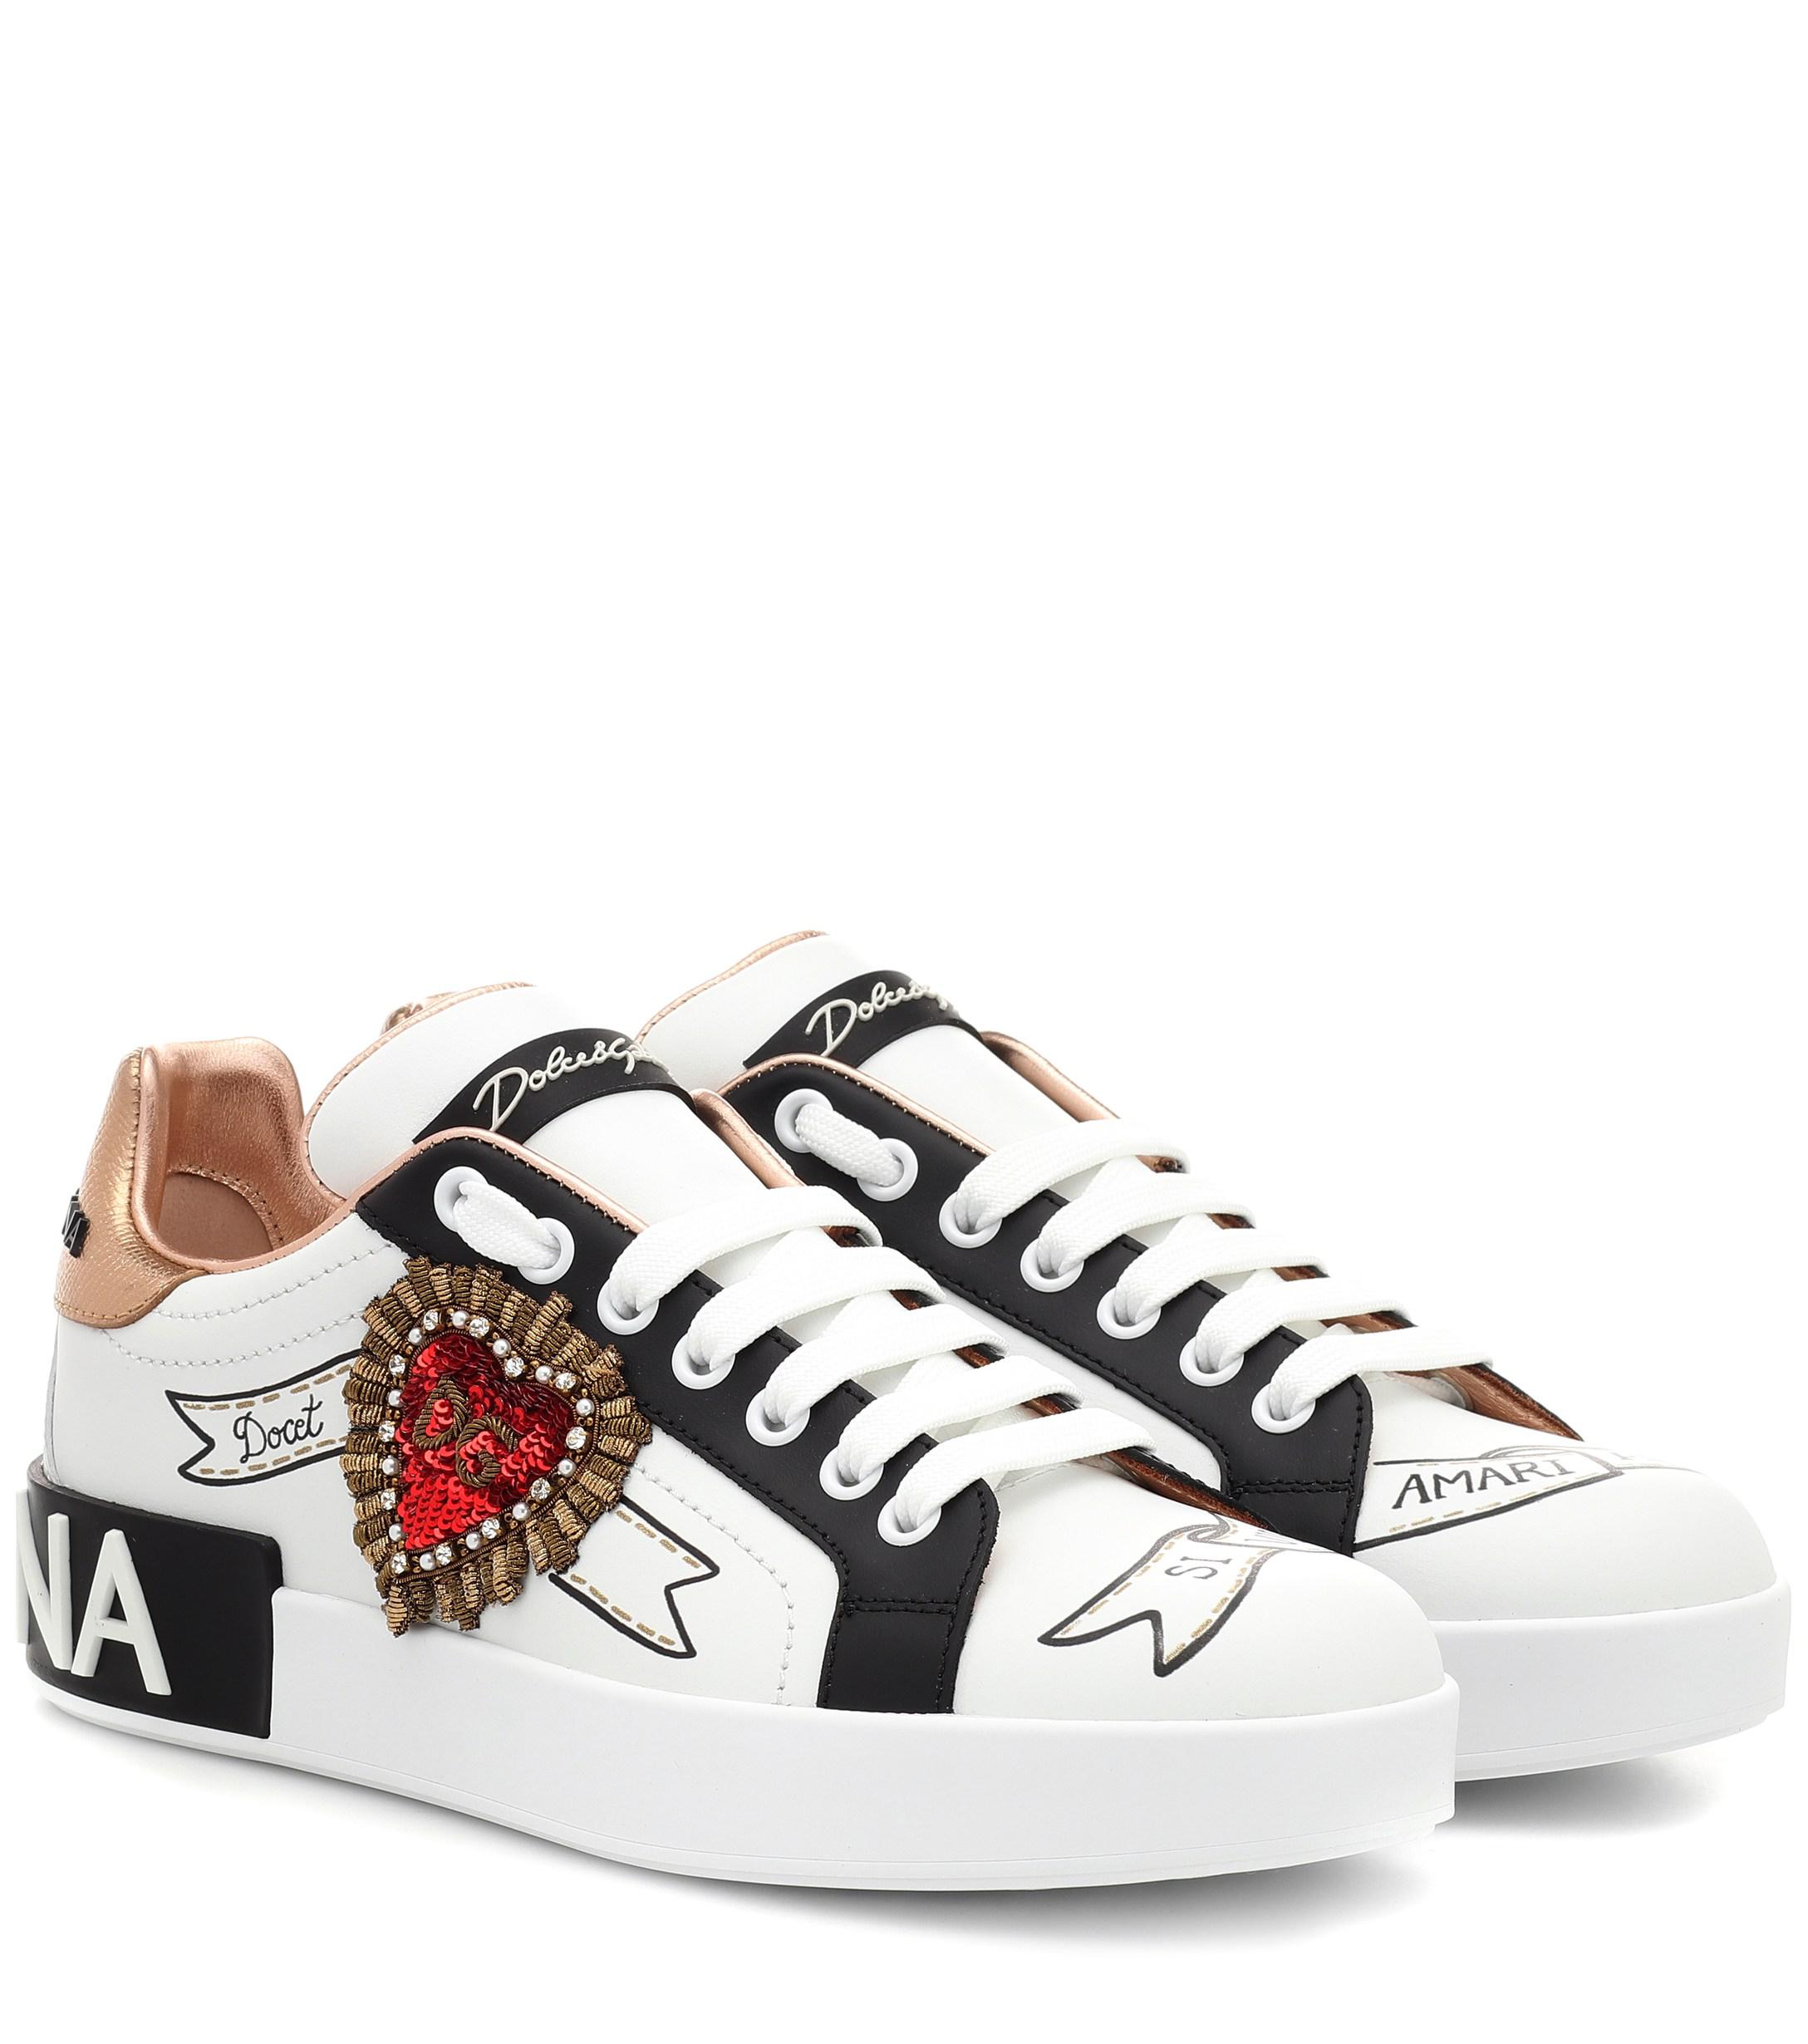 Lyst - Dolce & Gabbana Portofino Leather Sneakers